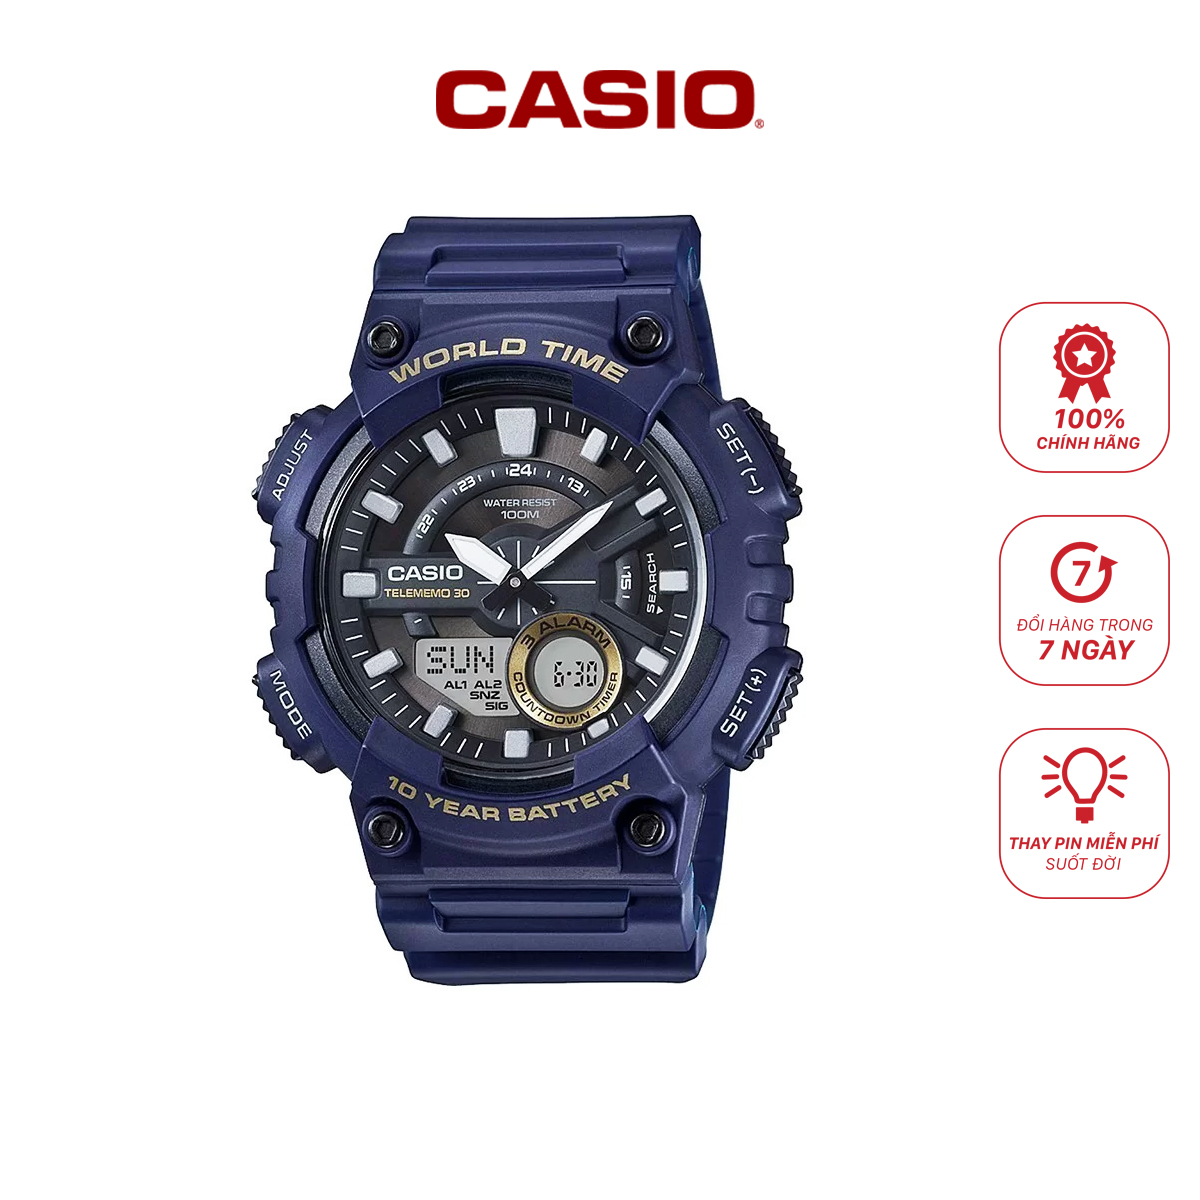 Đồng hồ nam Casio dây cao su AEQ-110W thể thao